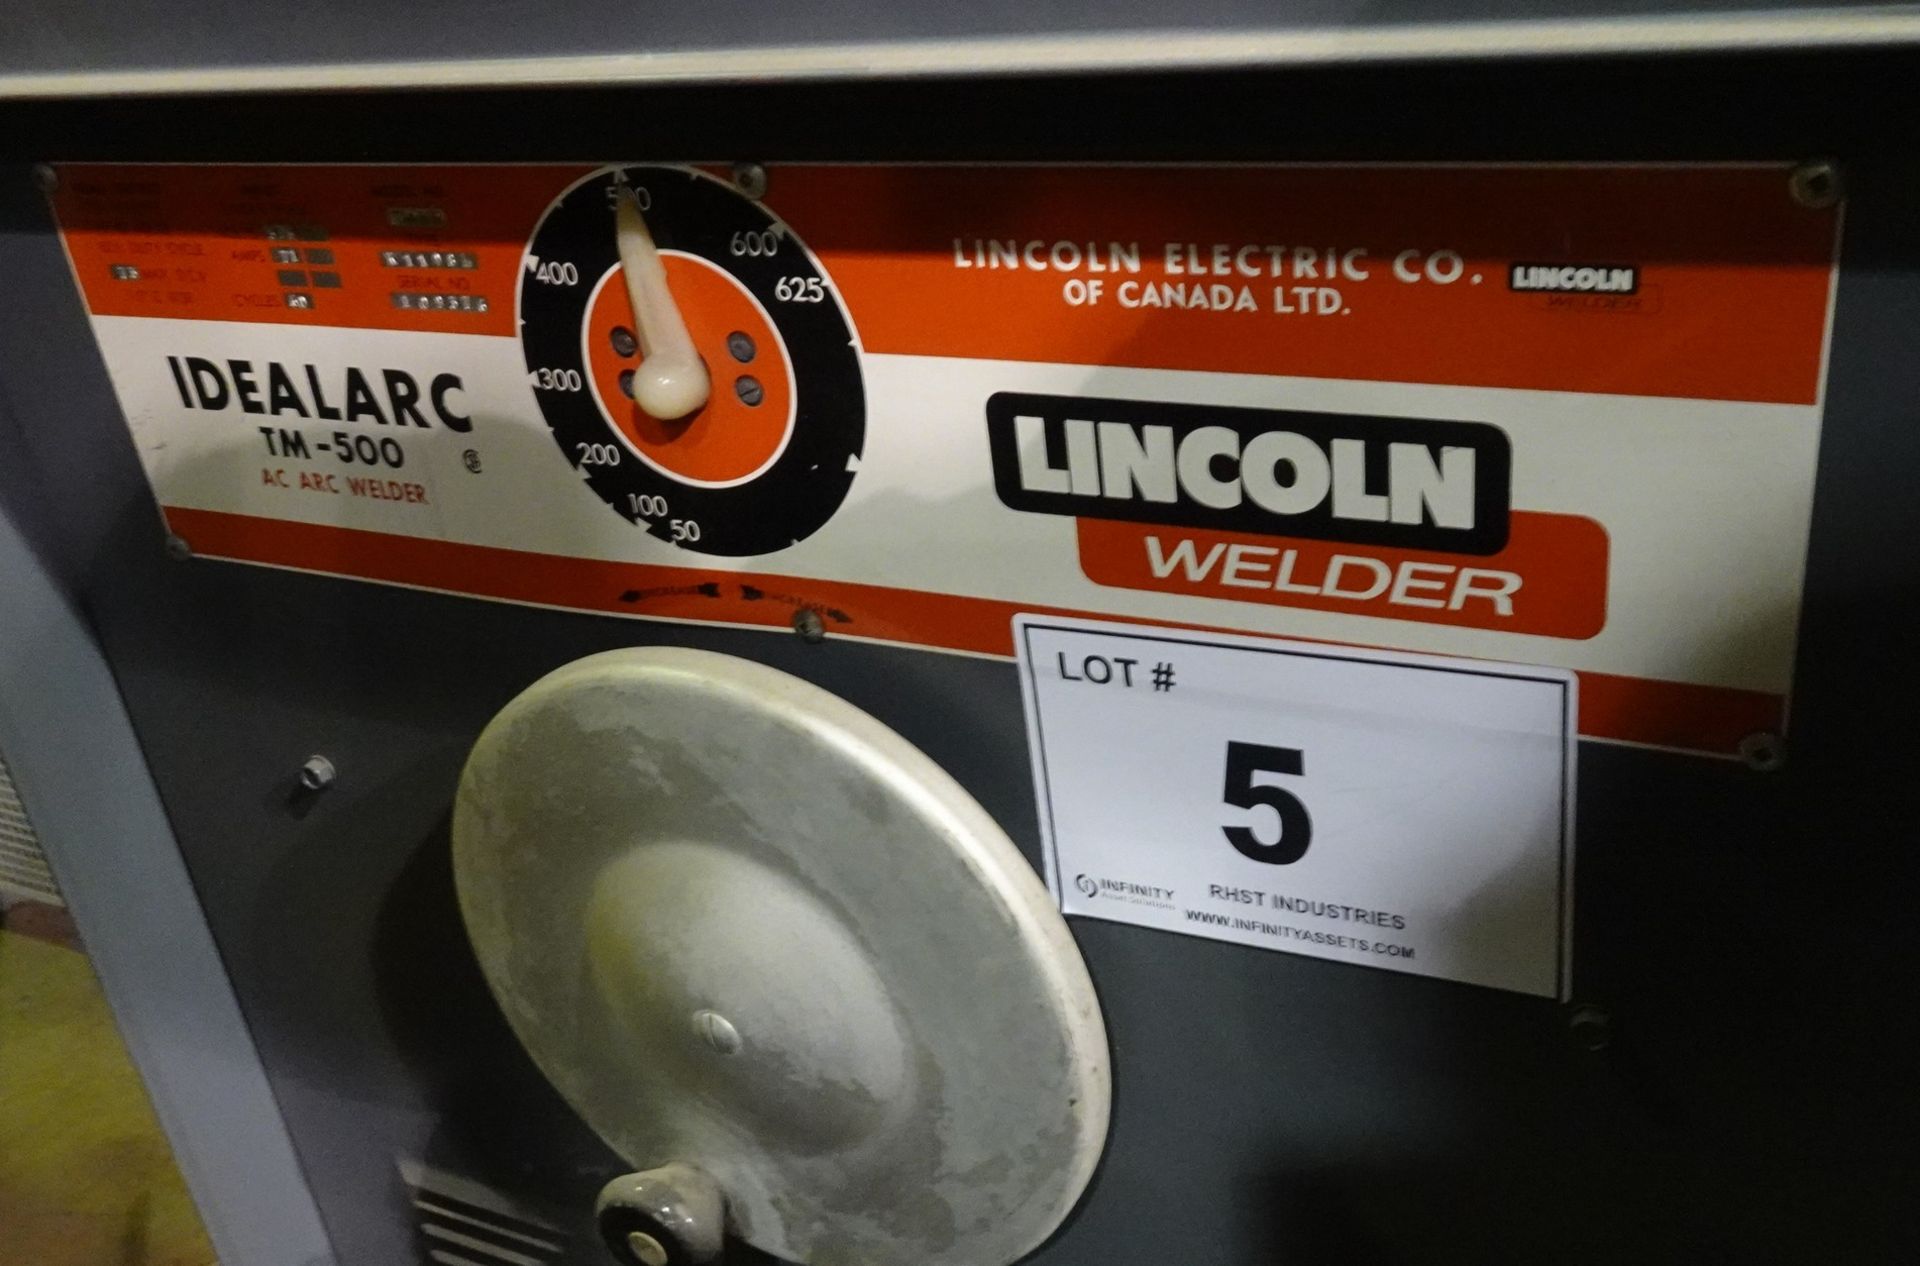 LINCOLN IDEALARC TM-500 AC ARC WELDER, S/N 109316 (RIGGING FEE $80) - Image 2 of 2